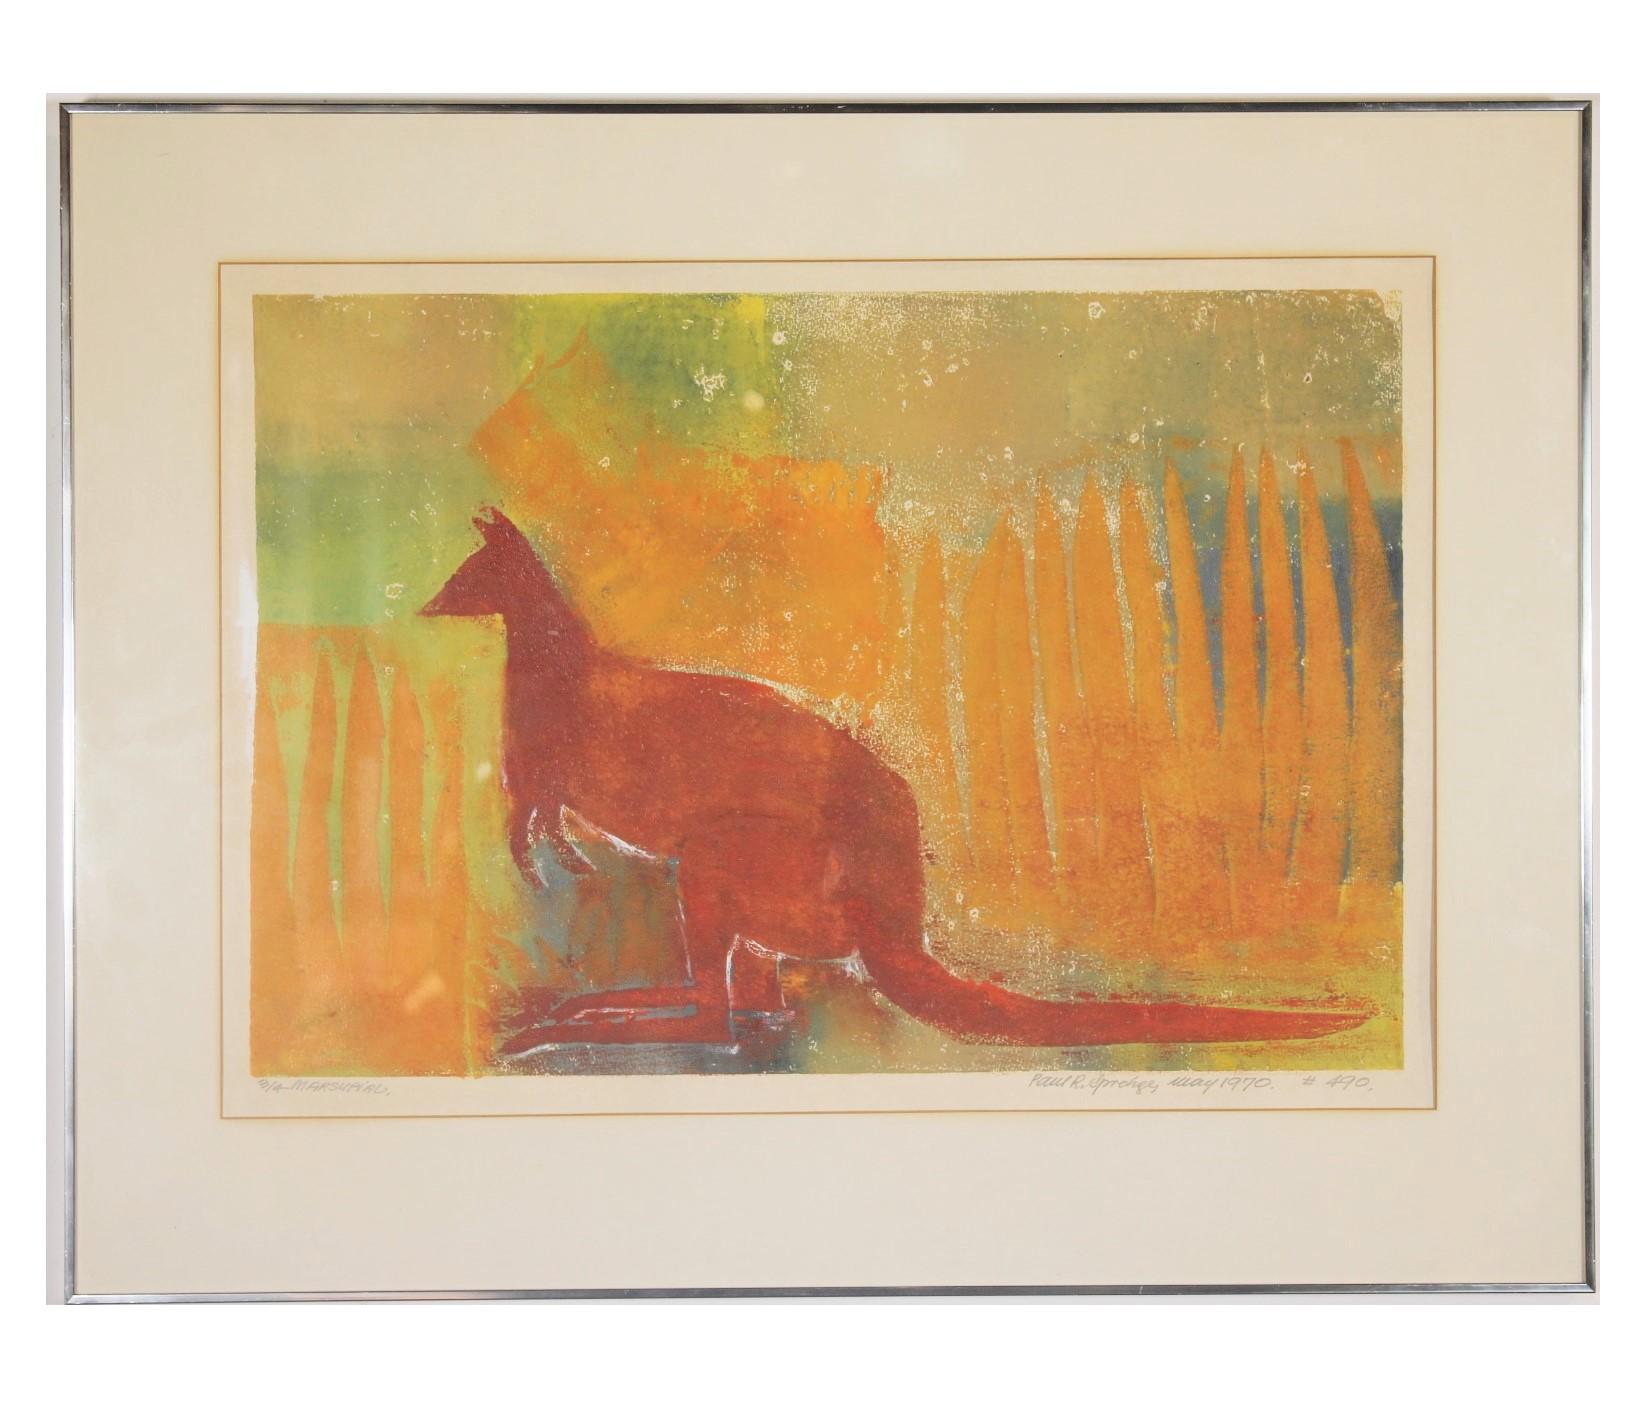 Abstract Print Paul Sprohge - "Marsupial" - Lithographie impressionniste abstraite d'un Kangourou - Édition 3 sur 4 